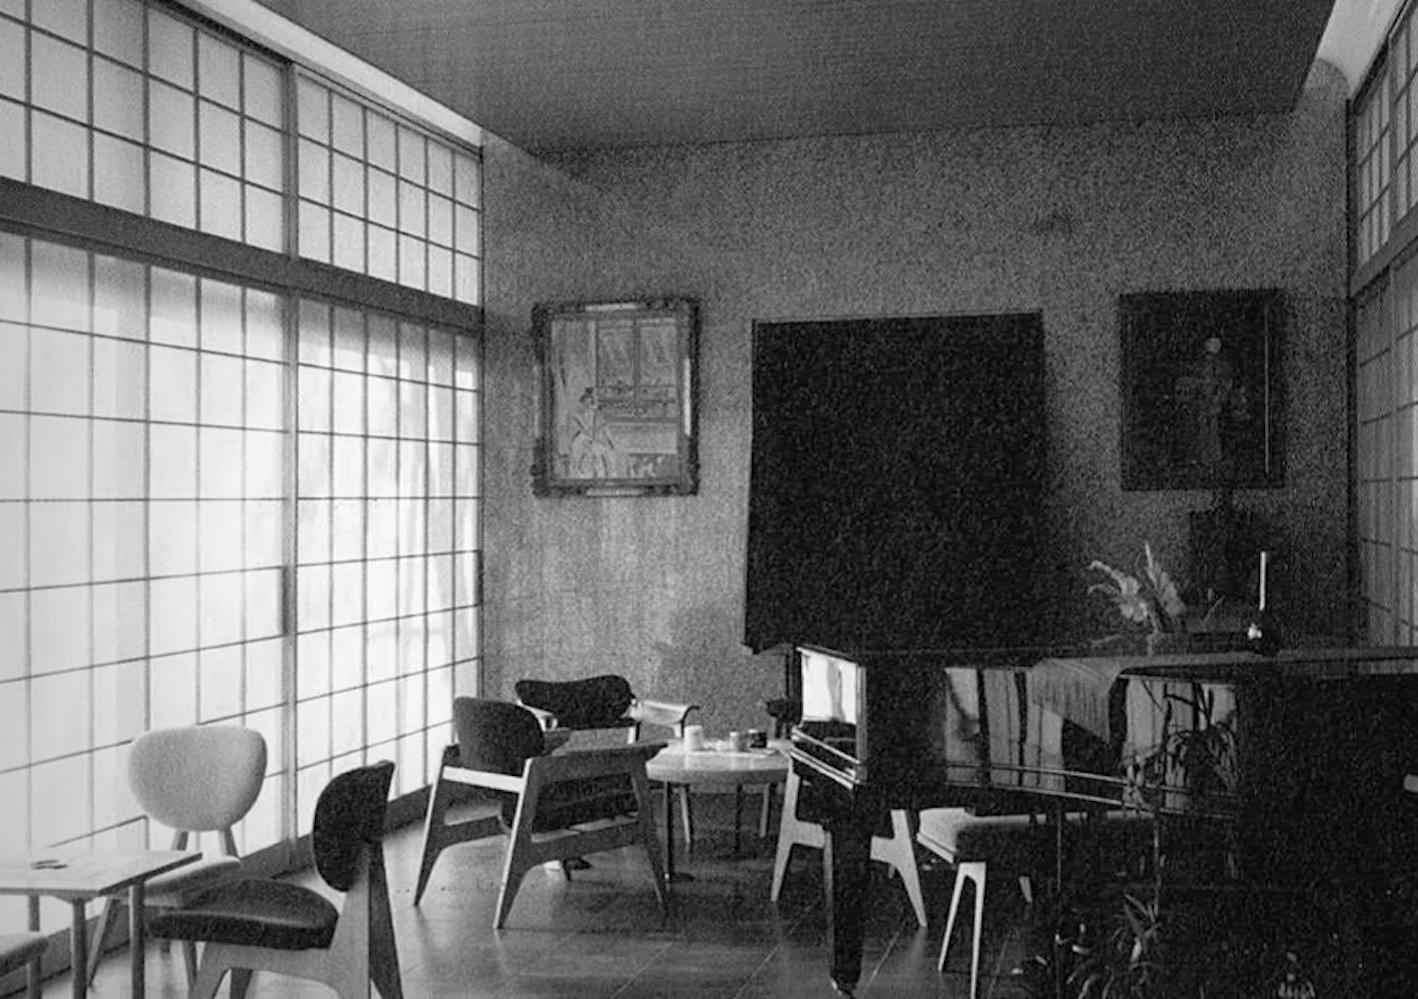 Japanese Sakakura Junzō, Daisaku Chō, Model 5016 Lounge Chair, Tendo Mokko Japan, 1957